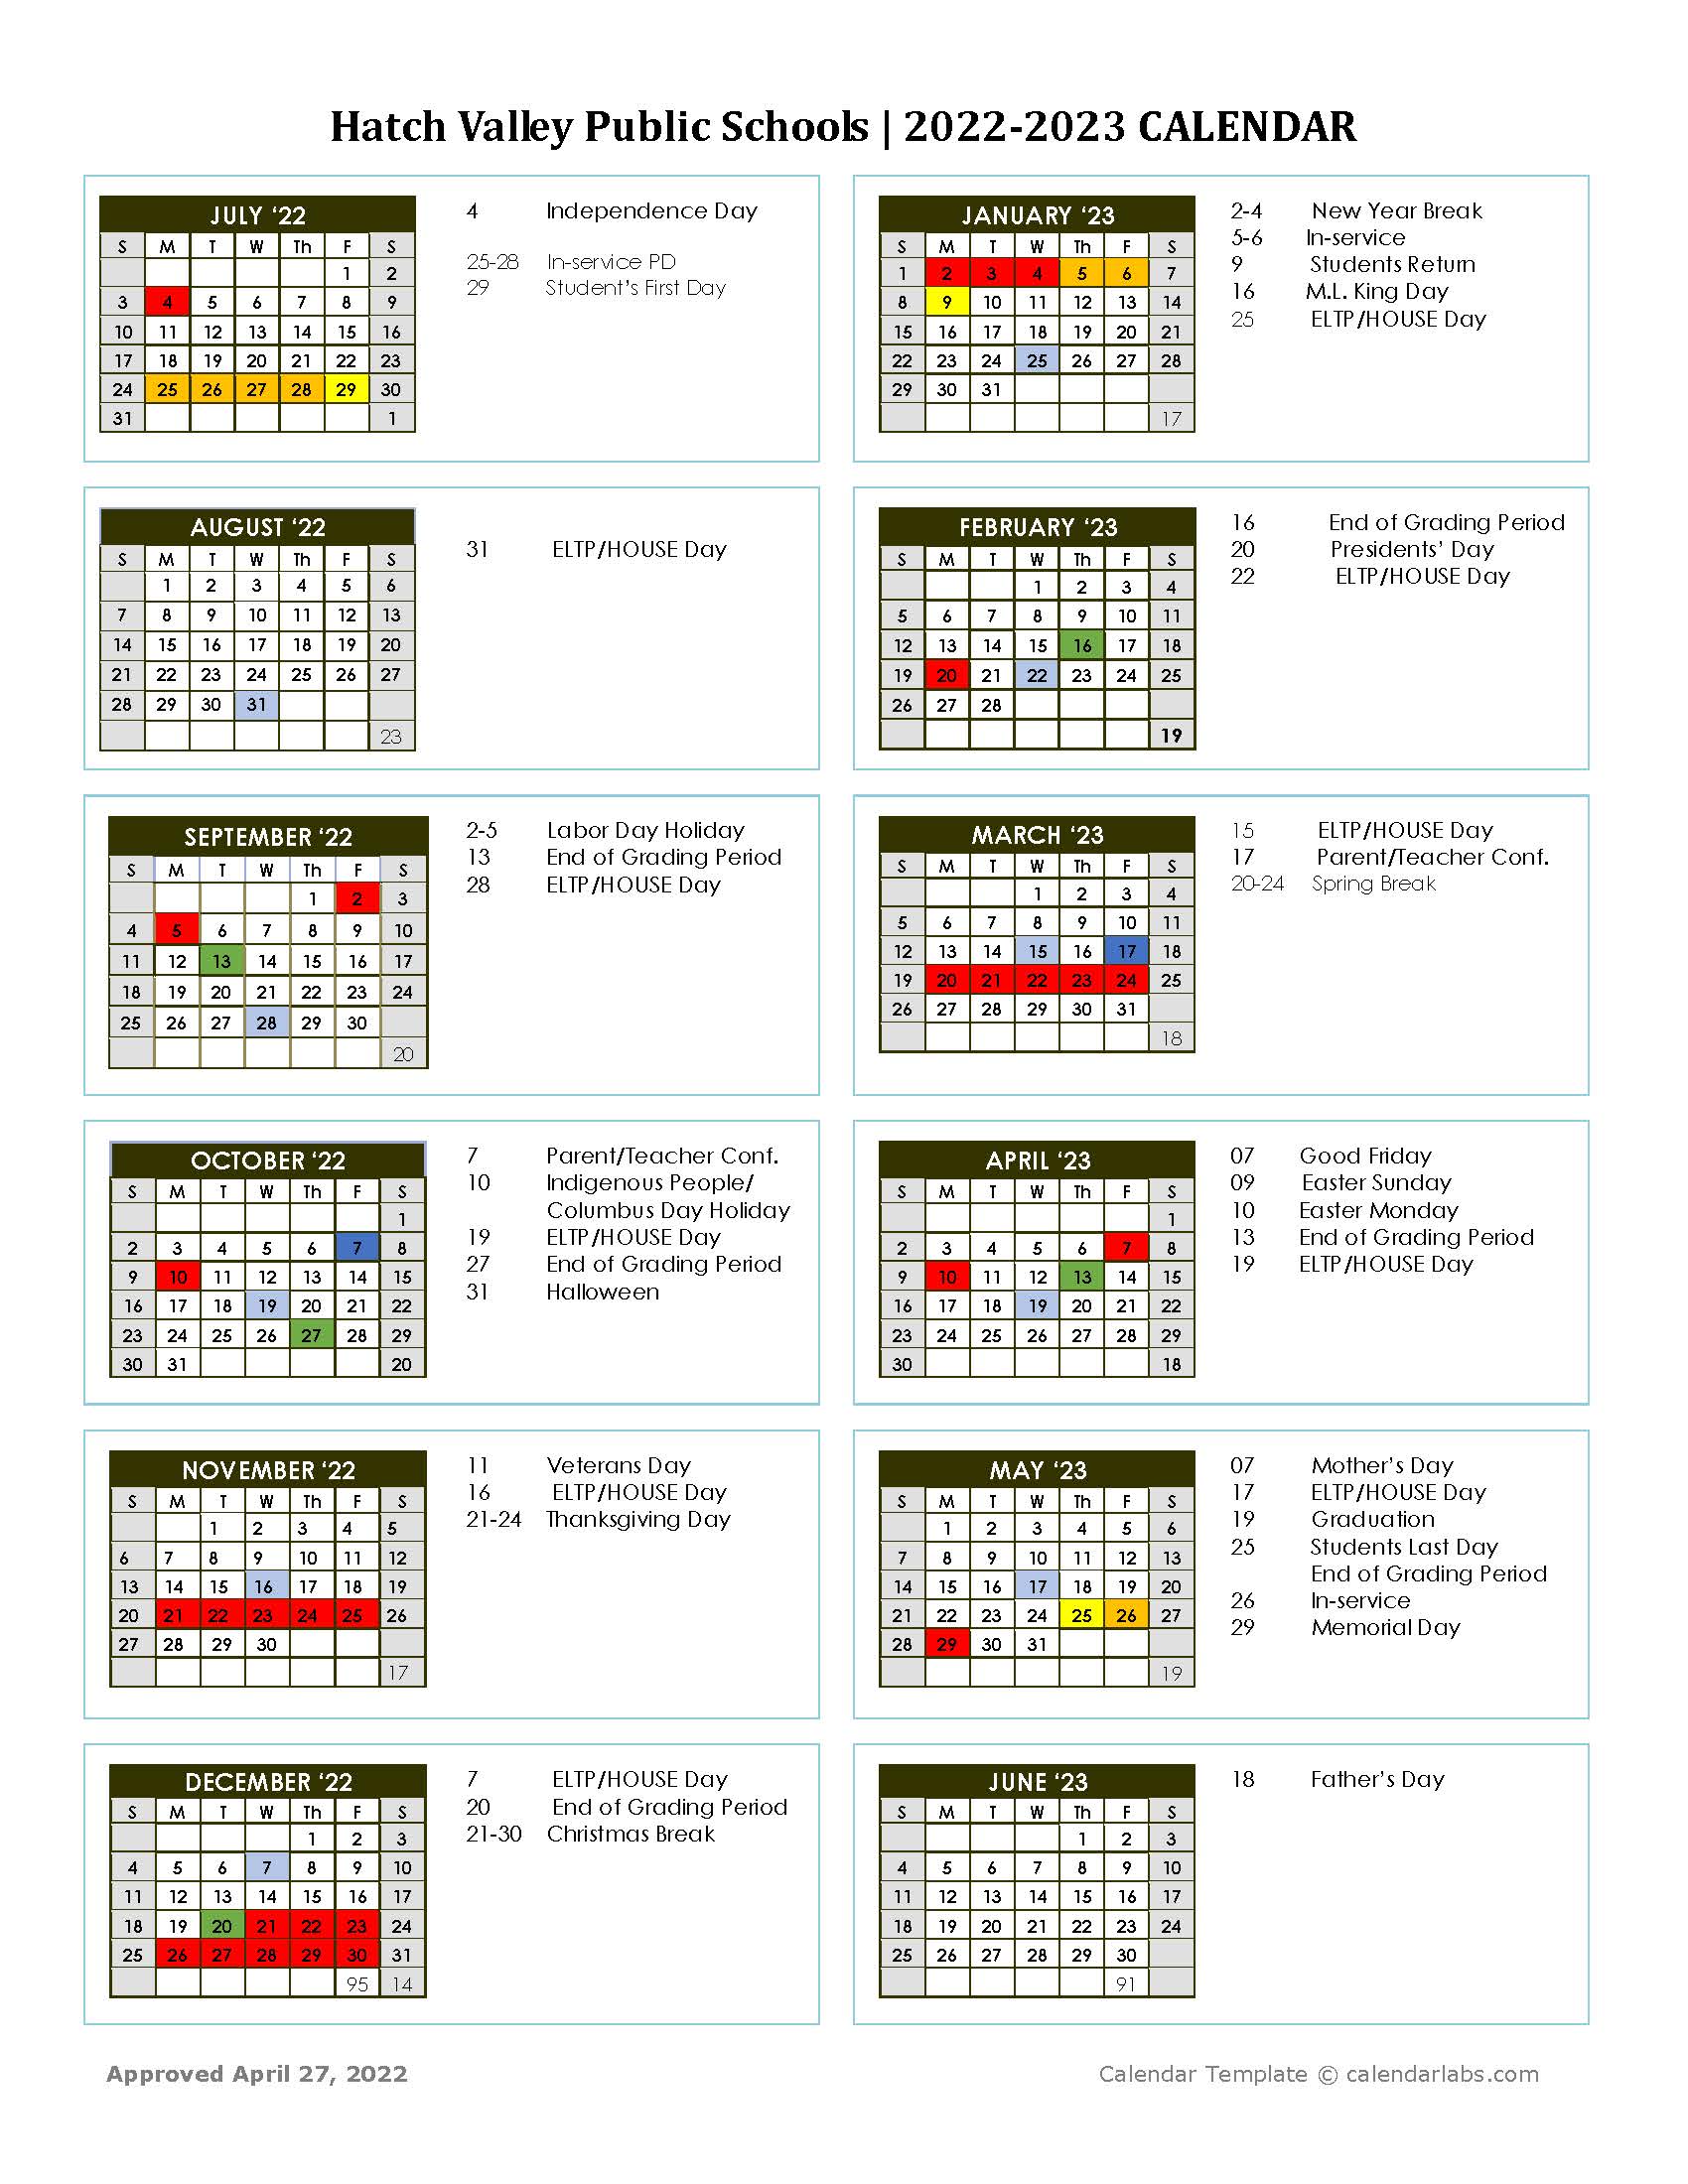 Instructional Calendar